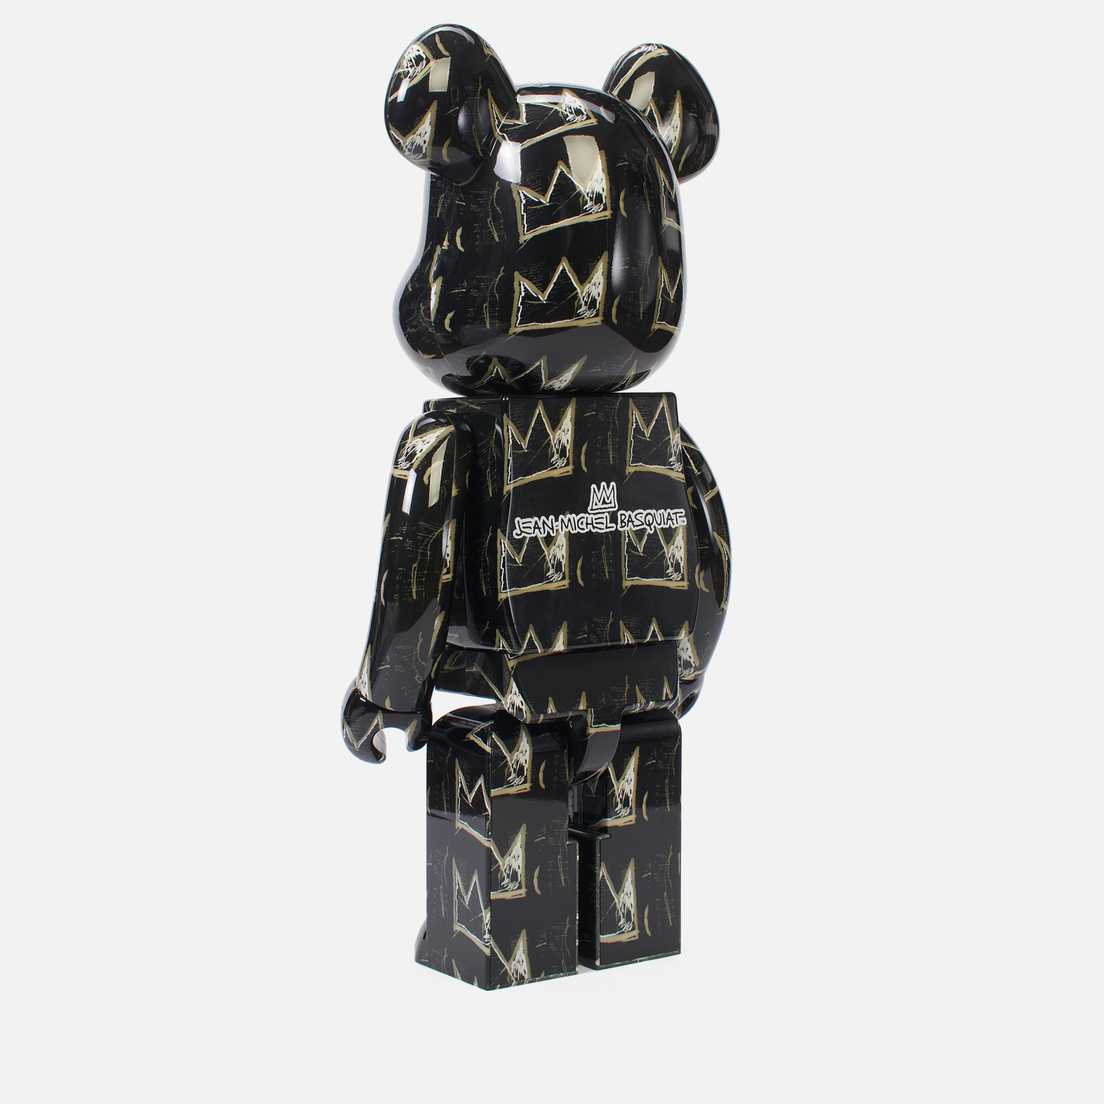 Medicom Toy Игрушка Jean-Michel Basquiat Ver. 8 1000%